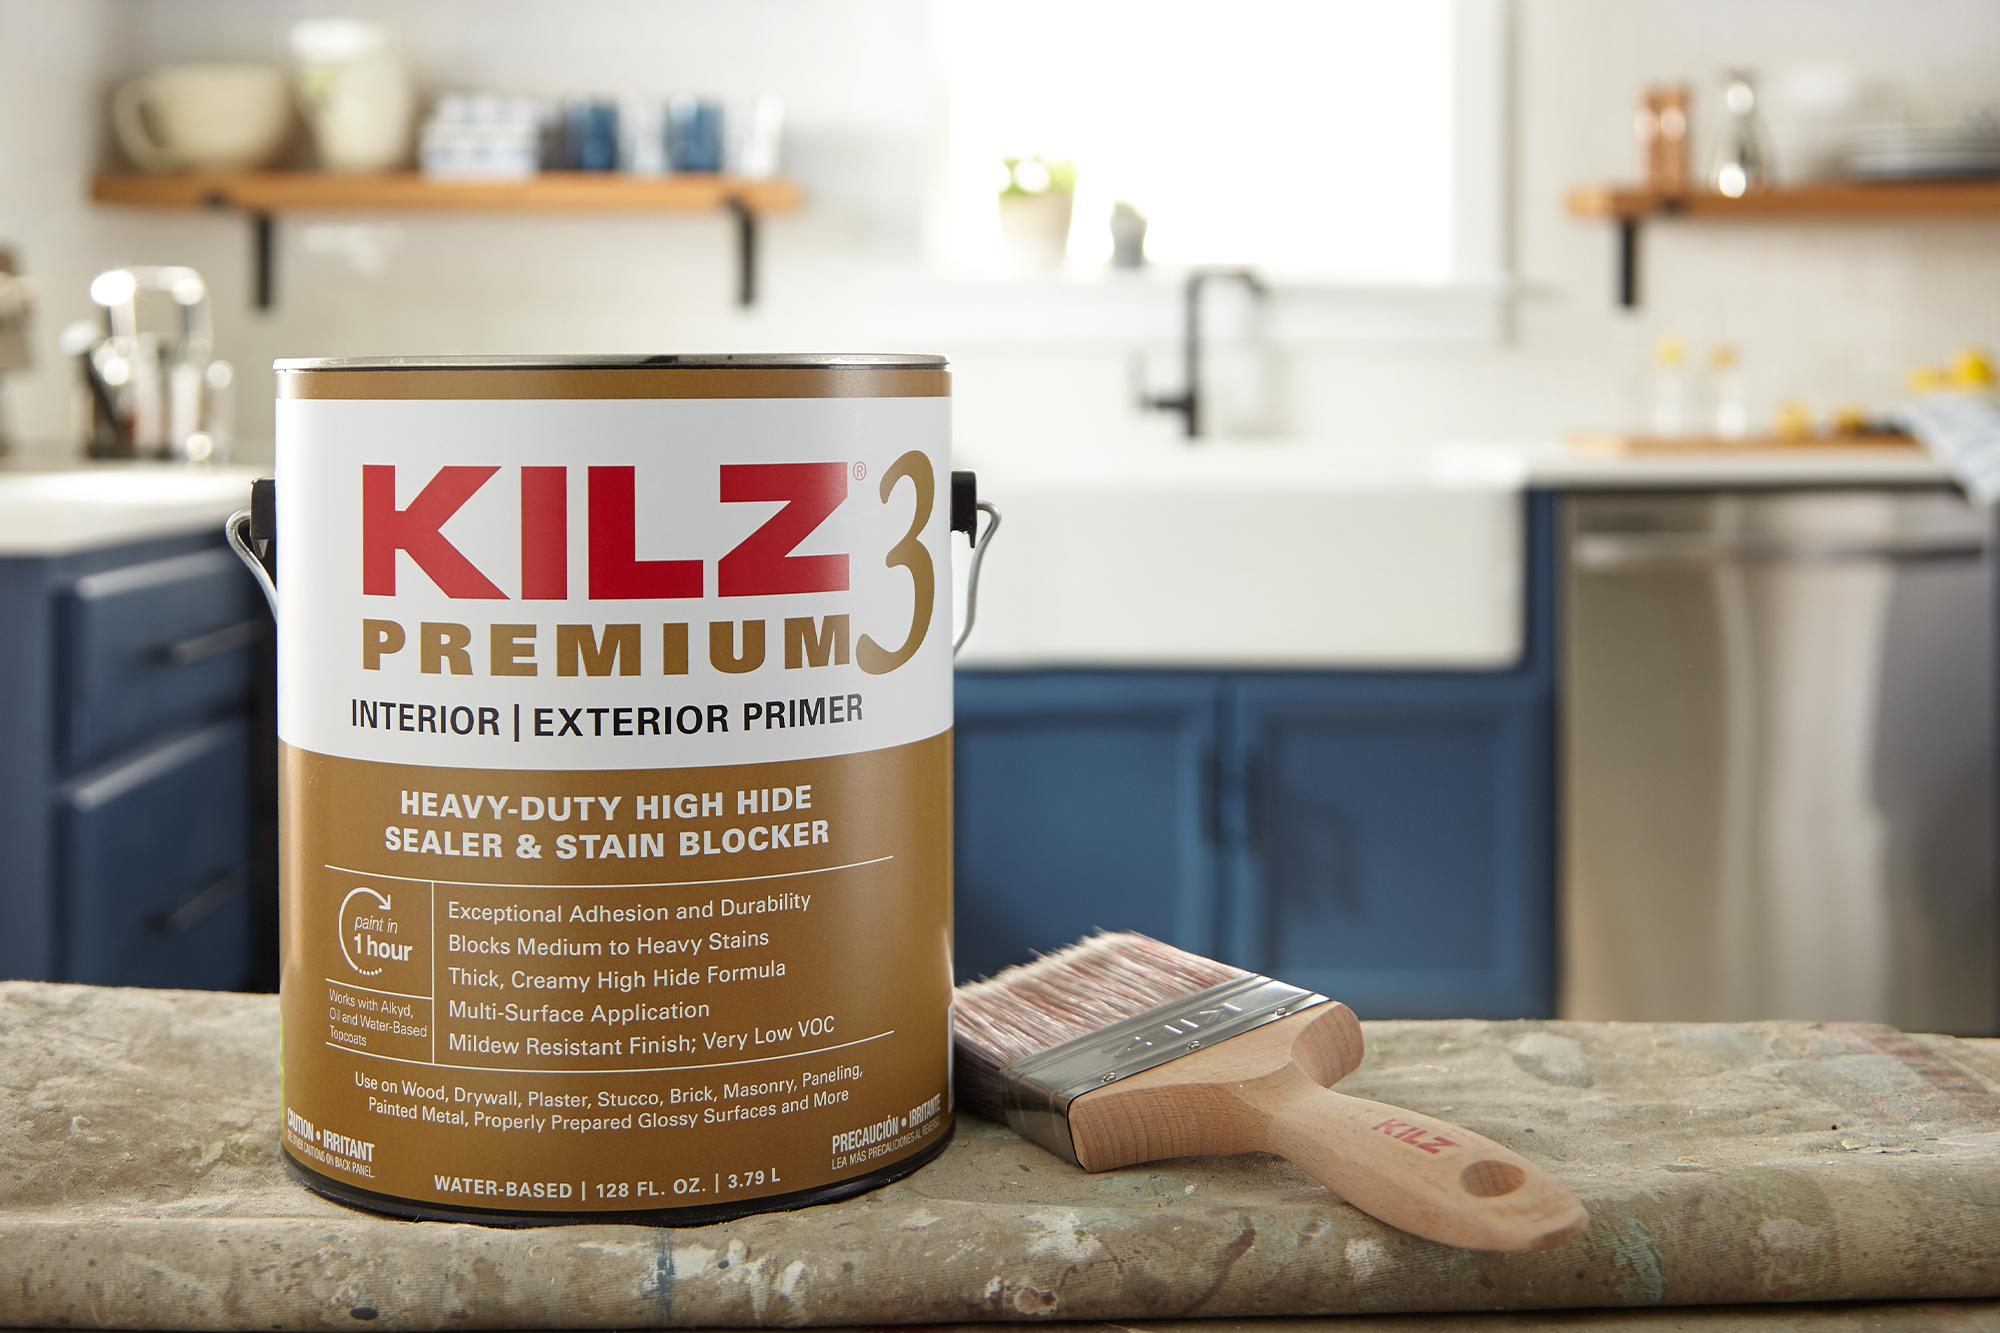 KILZ 3 Premium 1 gallon can in a kitchen.